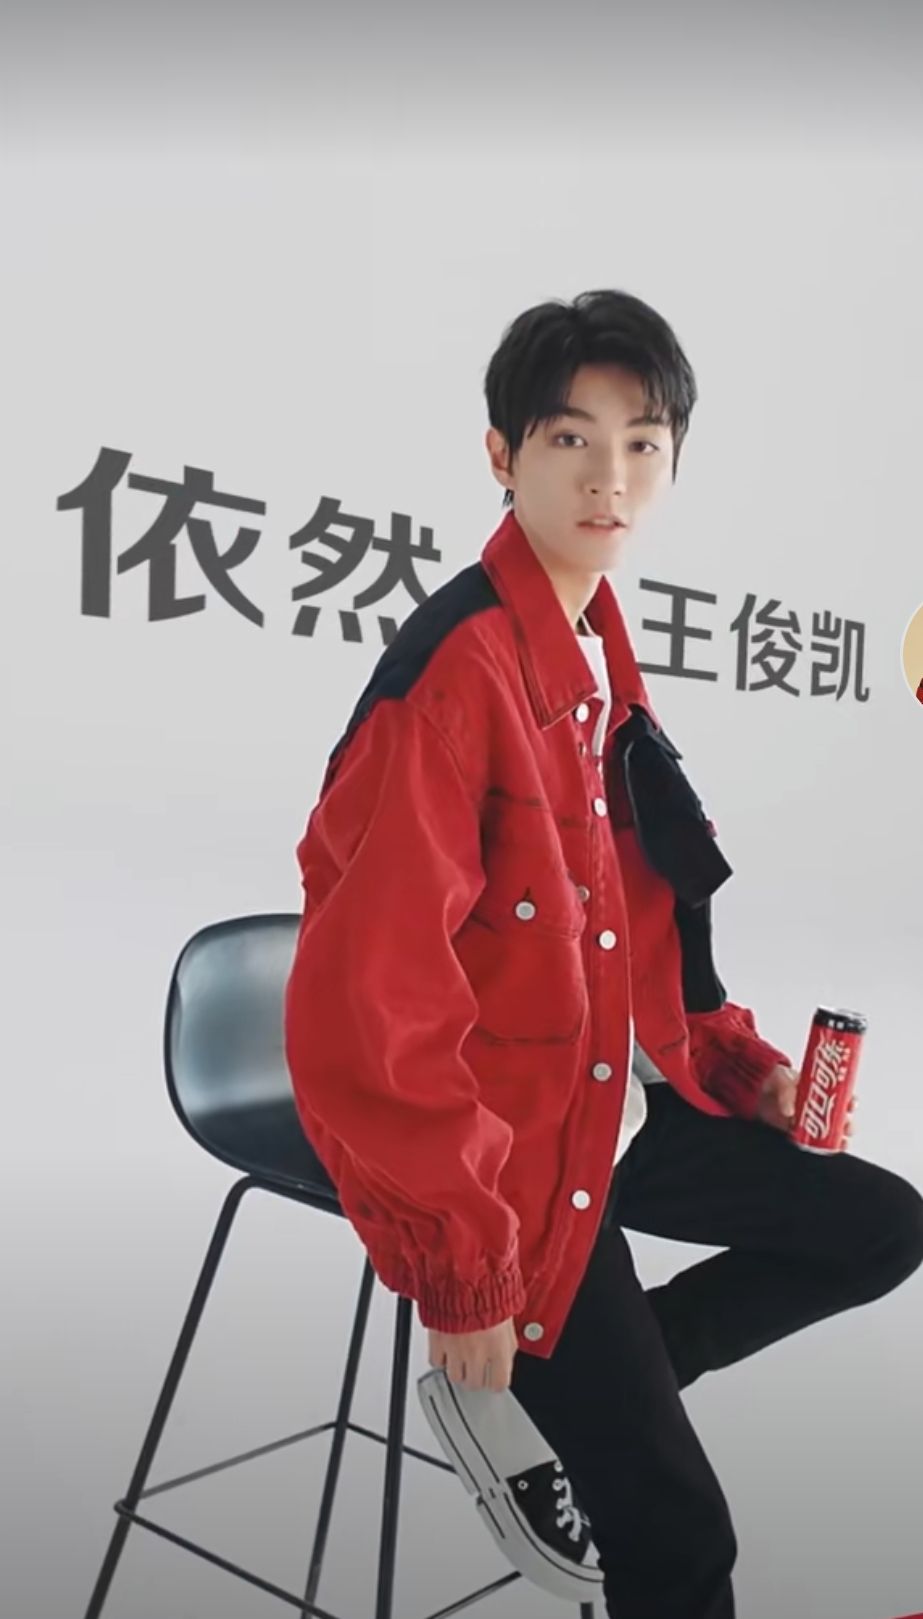 [tfboys][新闻]210412 王俊凯微博更新可口可乐代言大片一则,无论何时